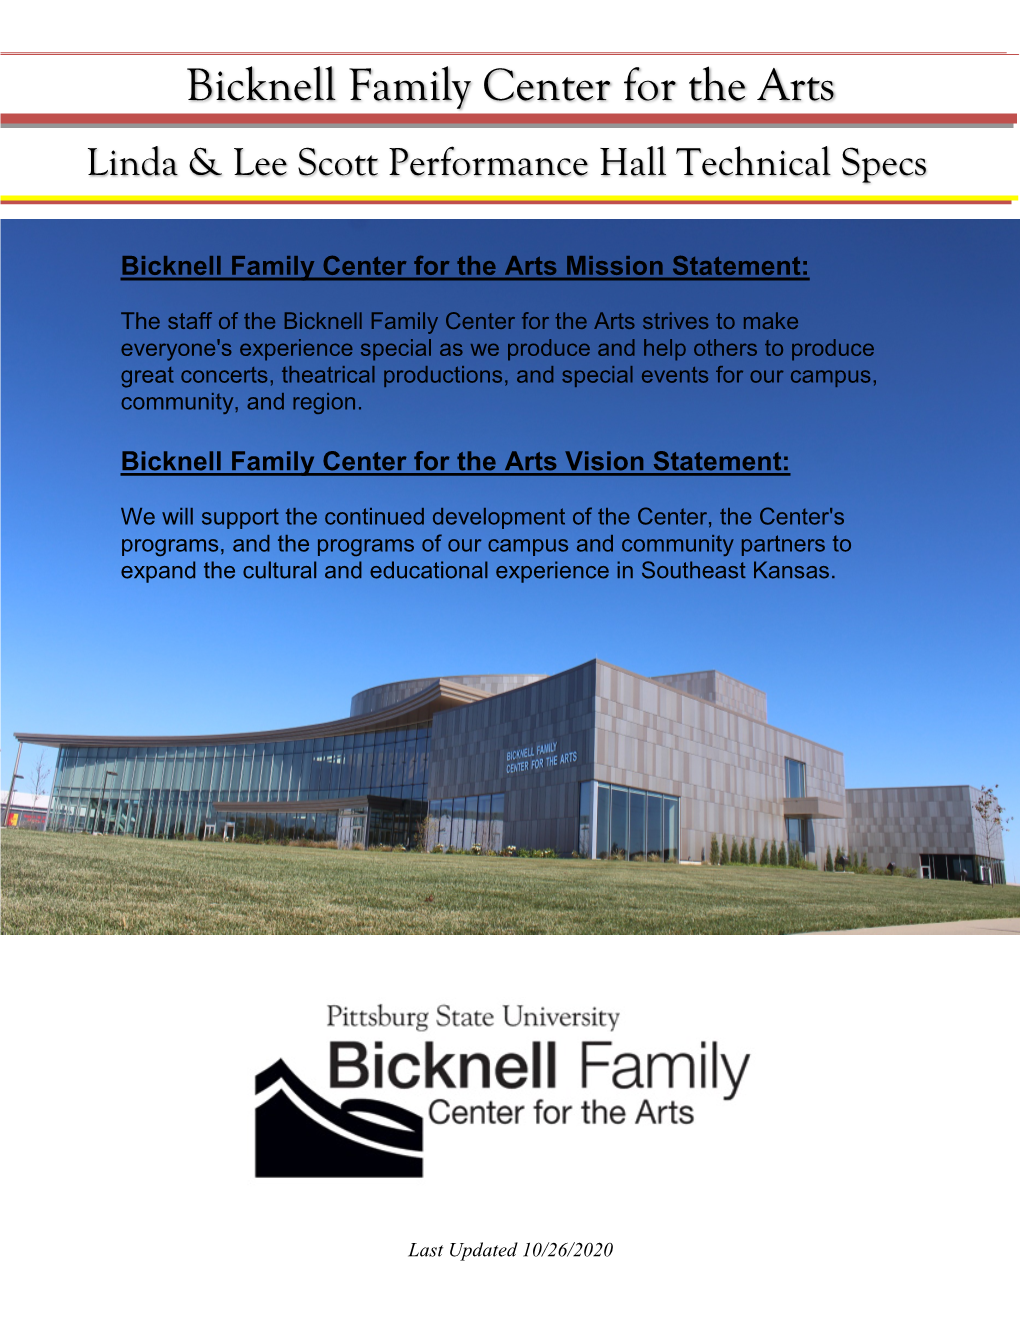 Linda & Lee Scott Performance Hall Technical Specs